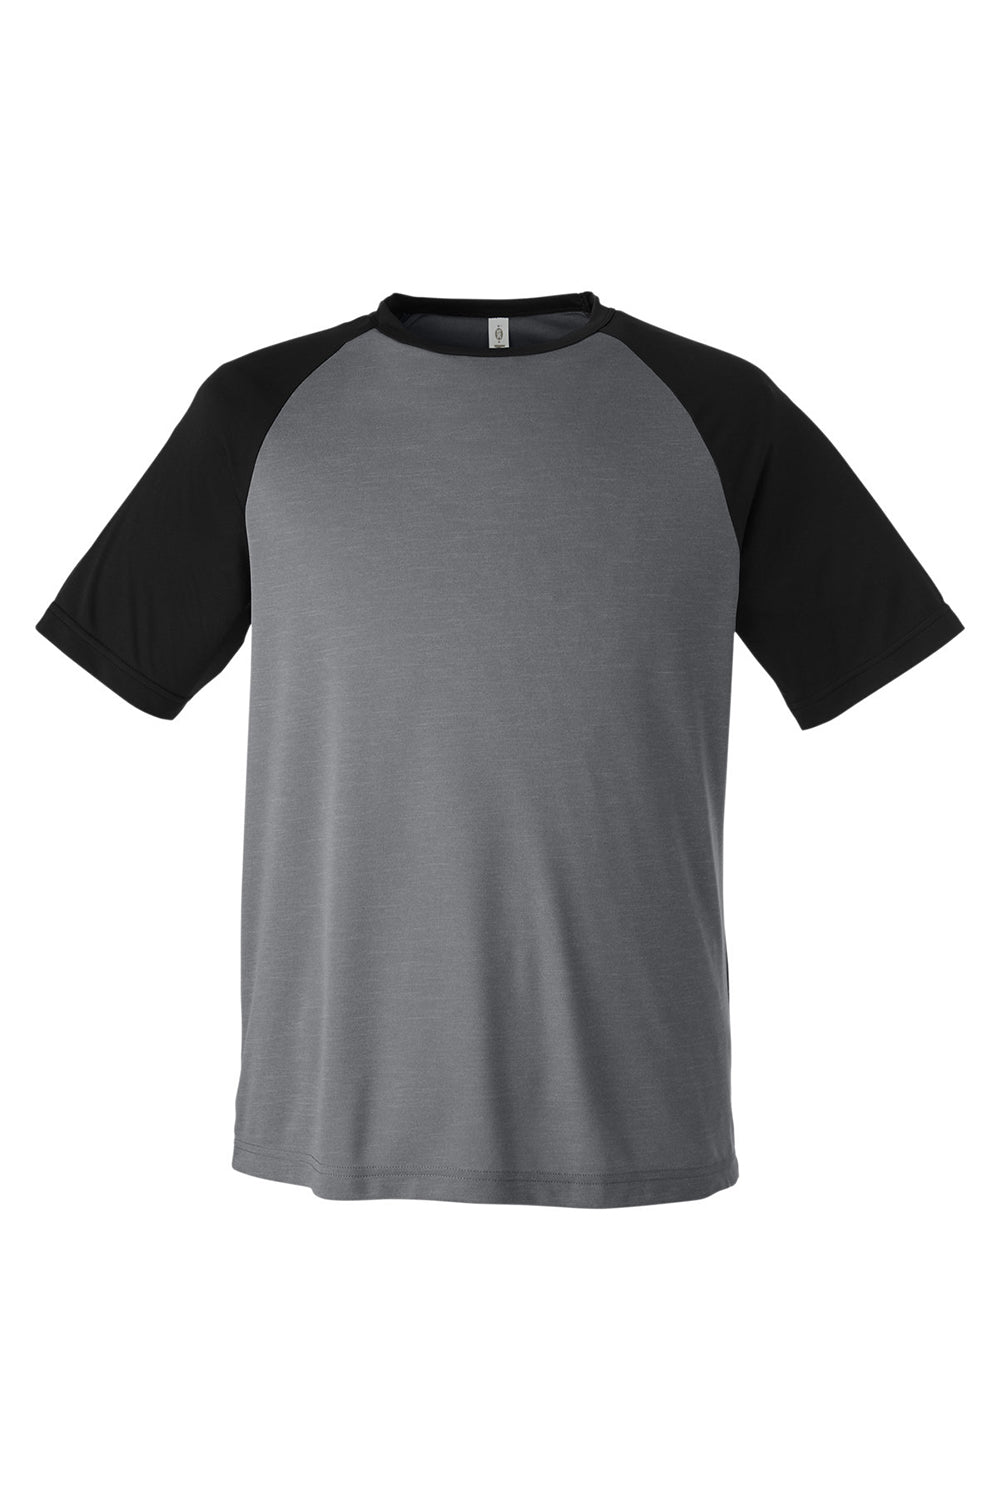 Team 365 TT62 Mens Zone Colorblock Moisture Wicking Short Sleeve Crewneck T-Shirt Heather Dark Grey/Black Flat Front